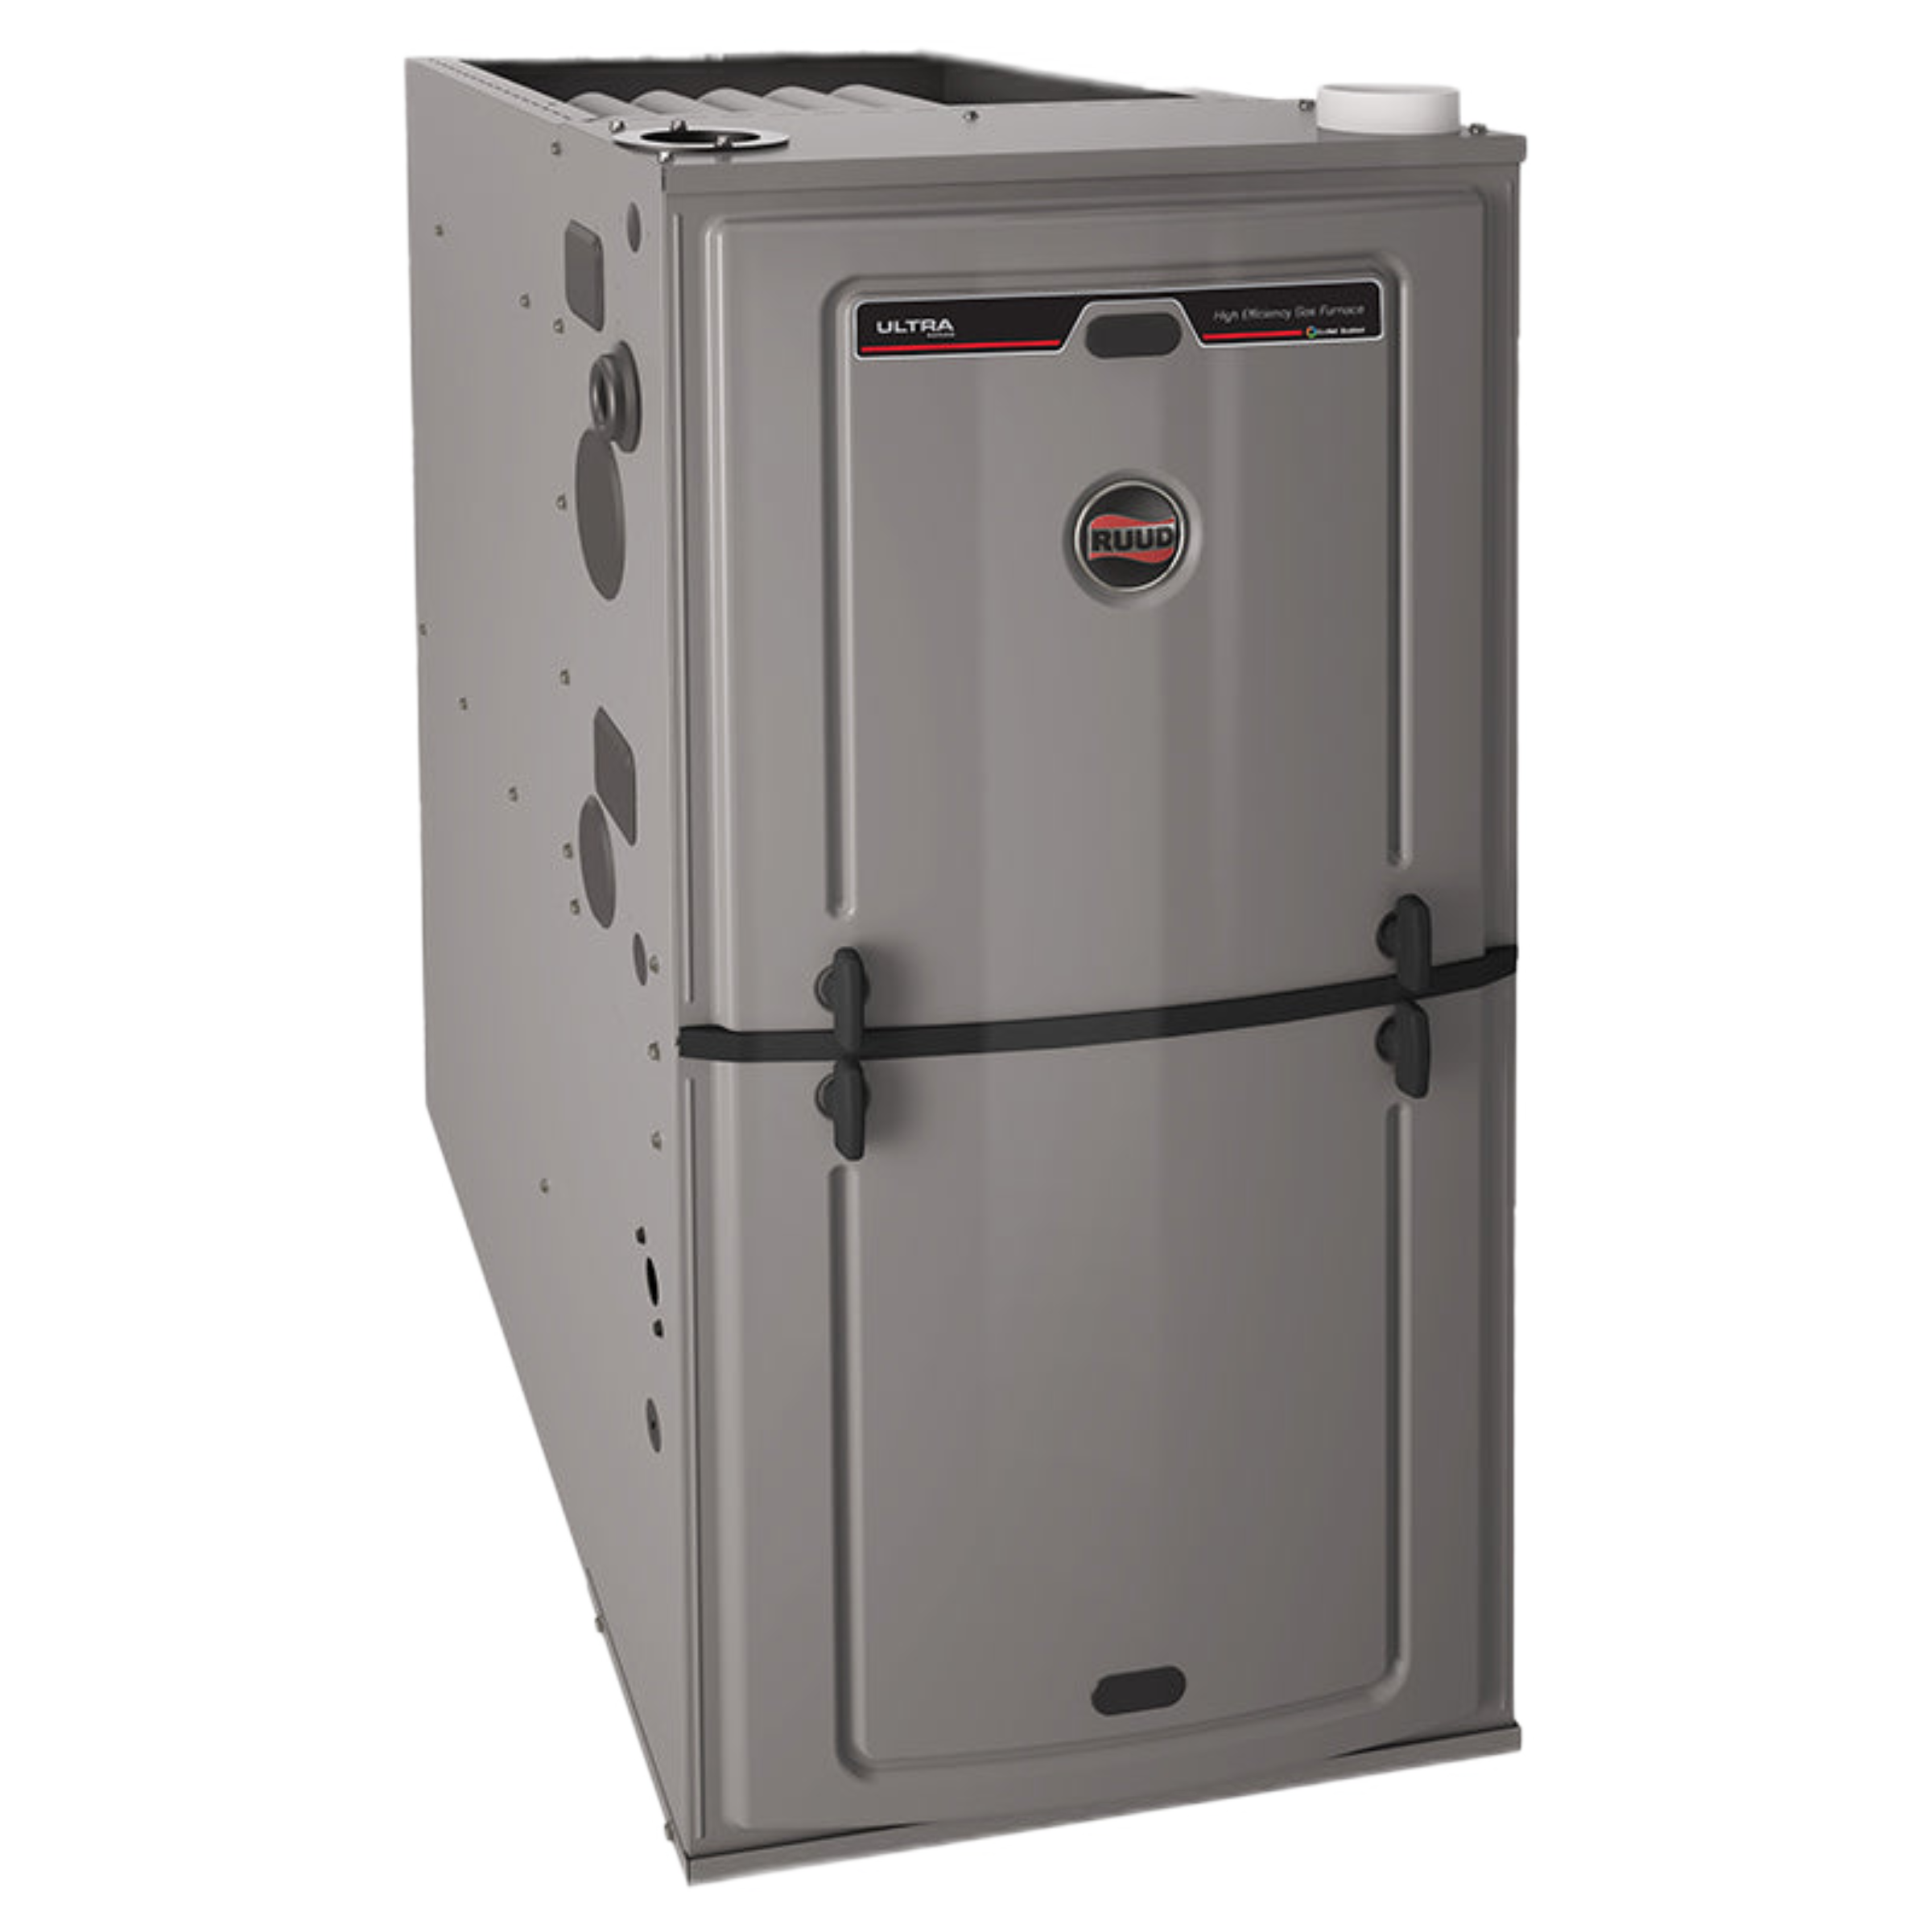 Ruud U98V Econet™ Ultra® Series Modulation Upflow Gas Furnace Input Rates From 60 To 115 Kbtu, 98% A.F.U.E., Energy Star Qualified